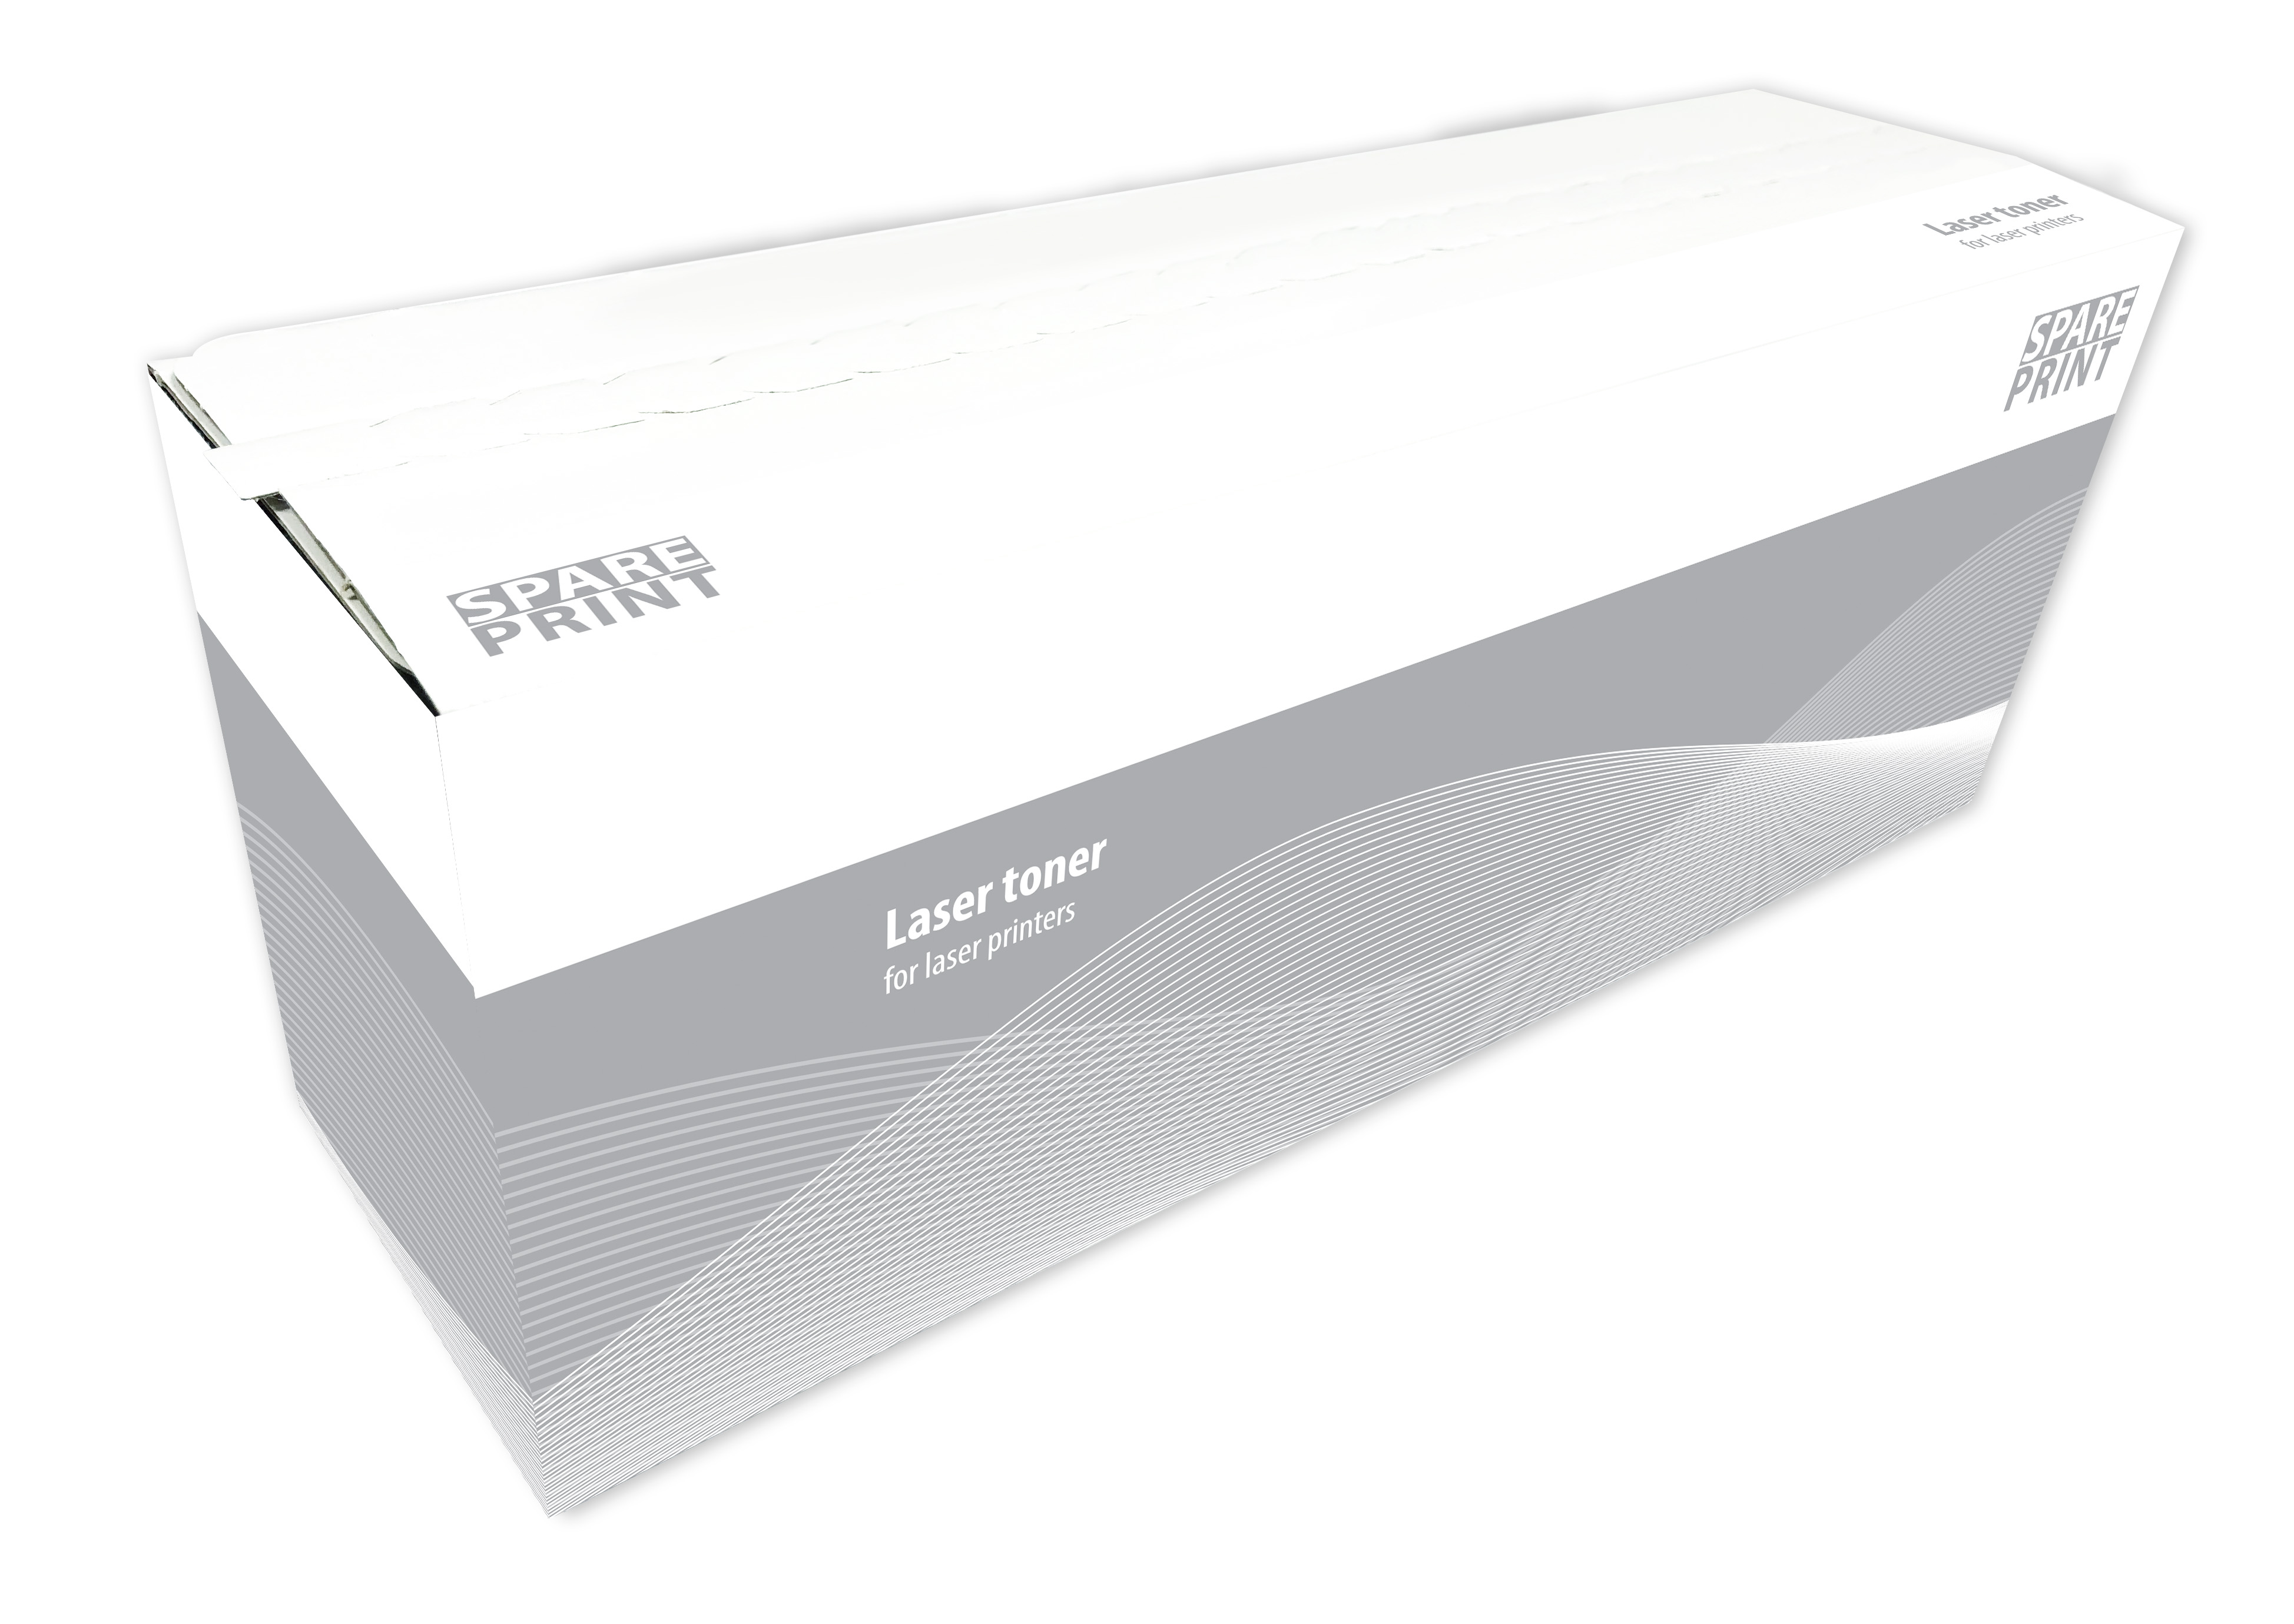 SPARE PRINT kompatibilní toner 106R02778 Black pro tiskárny Xerox